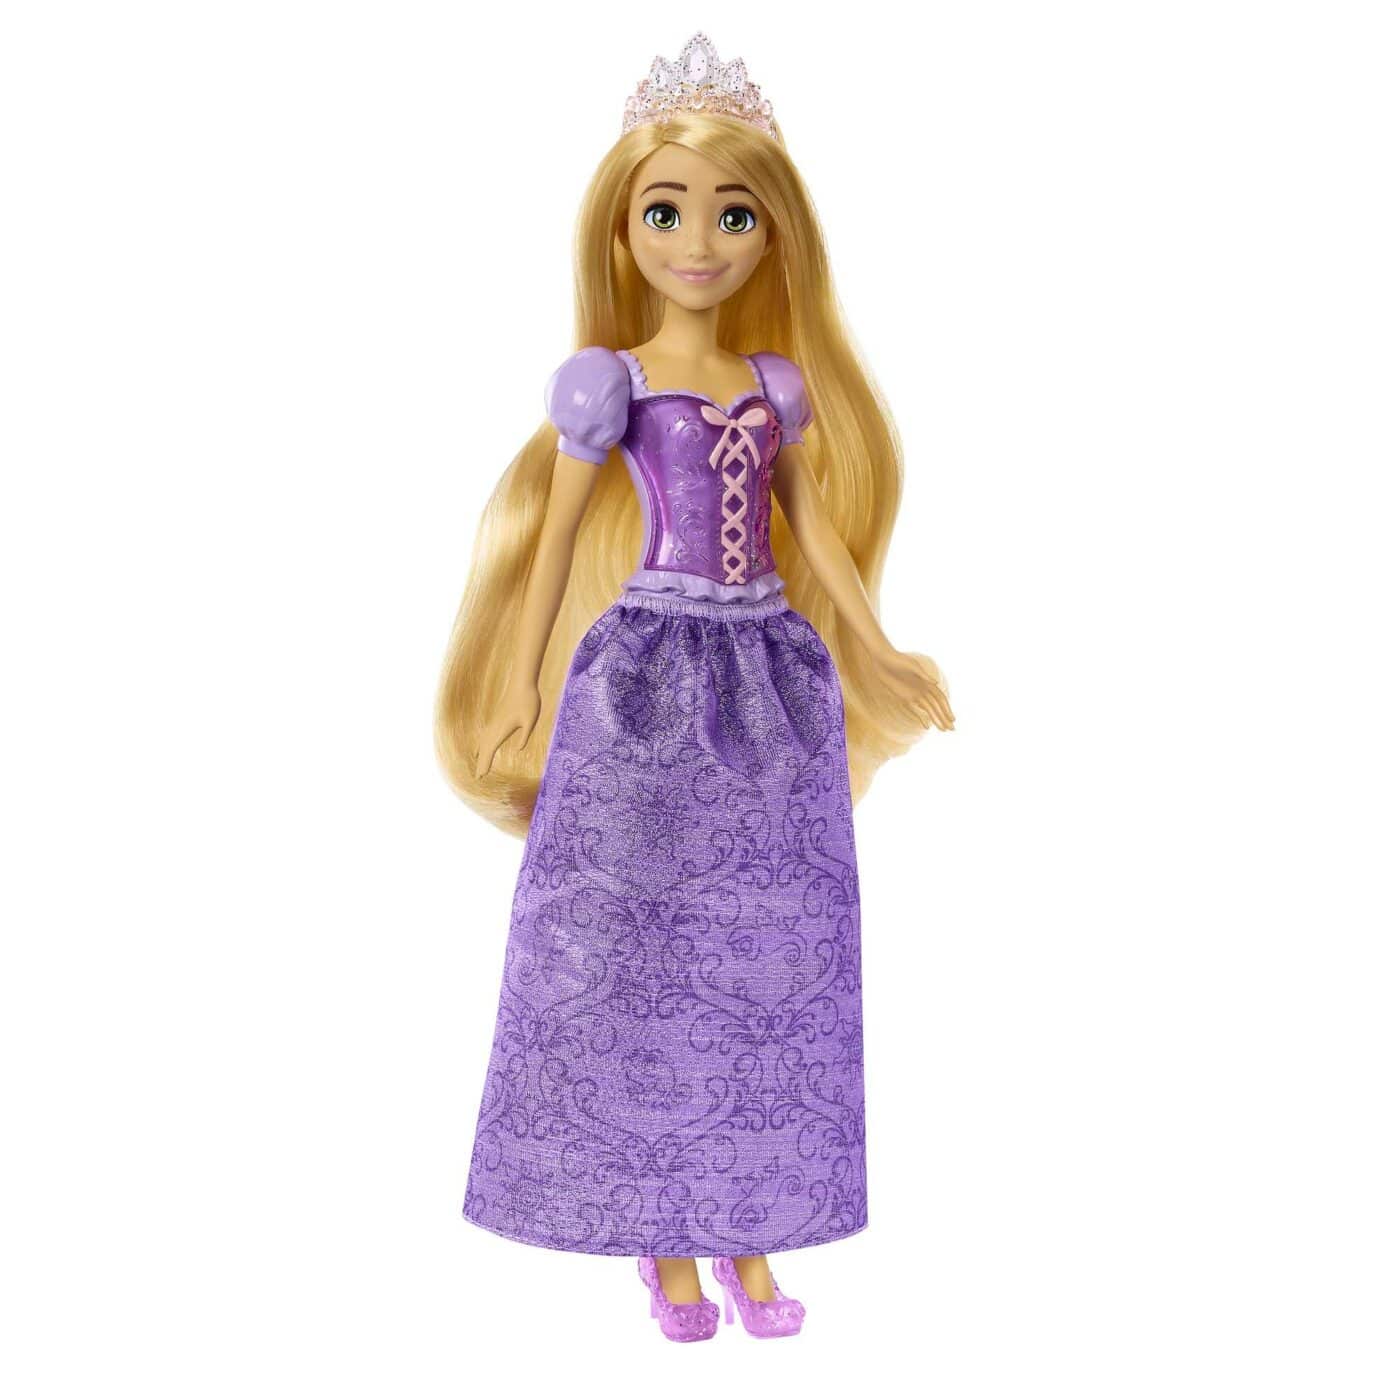 Disney Princess - Rapunzel Doll